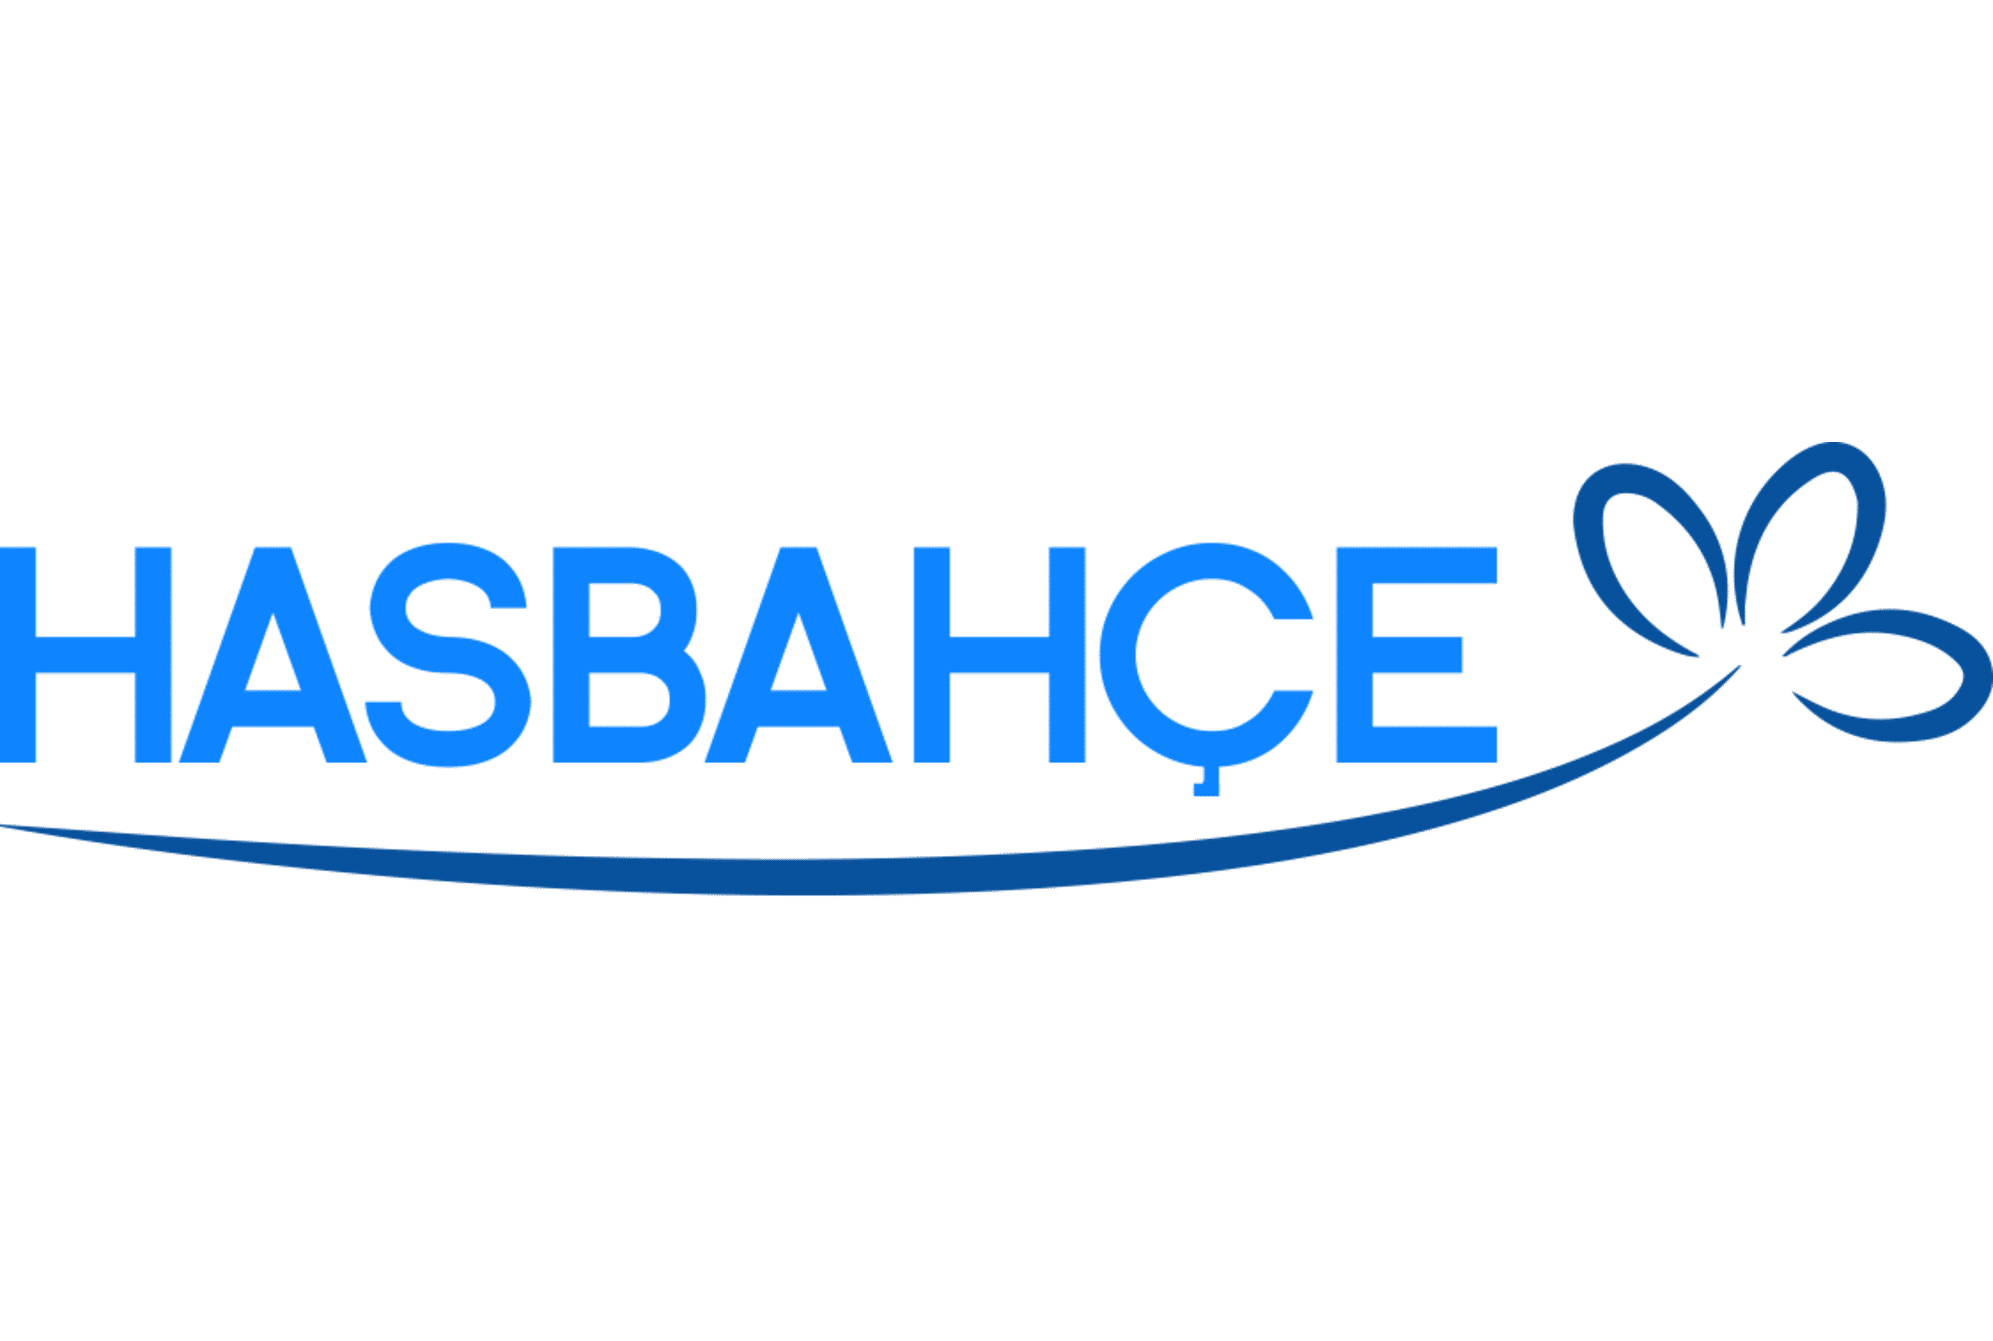 hasbahce-logo